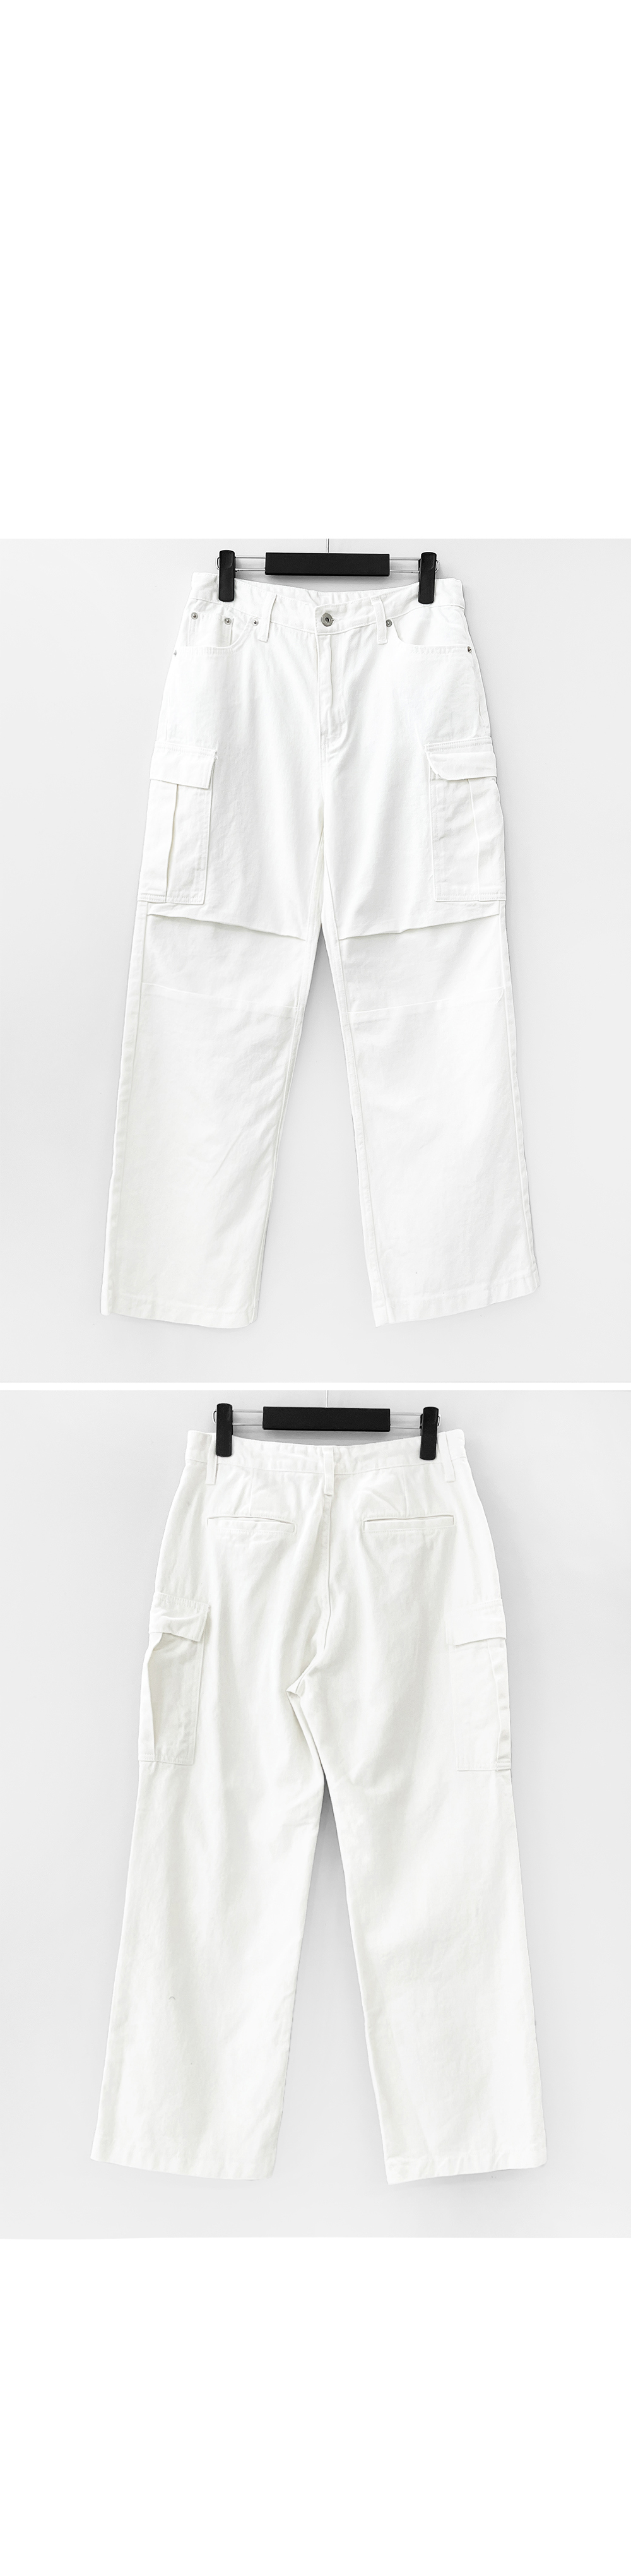 suspenders skirt/pants white color image-S1L29